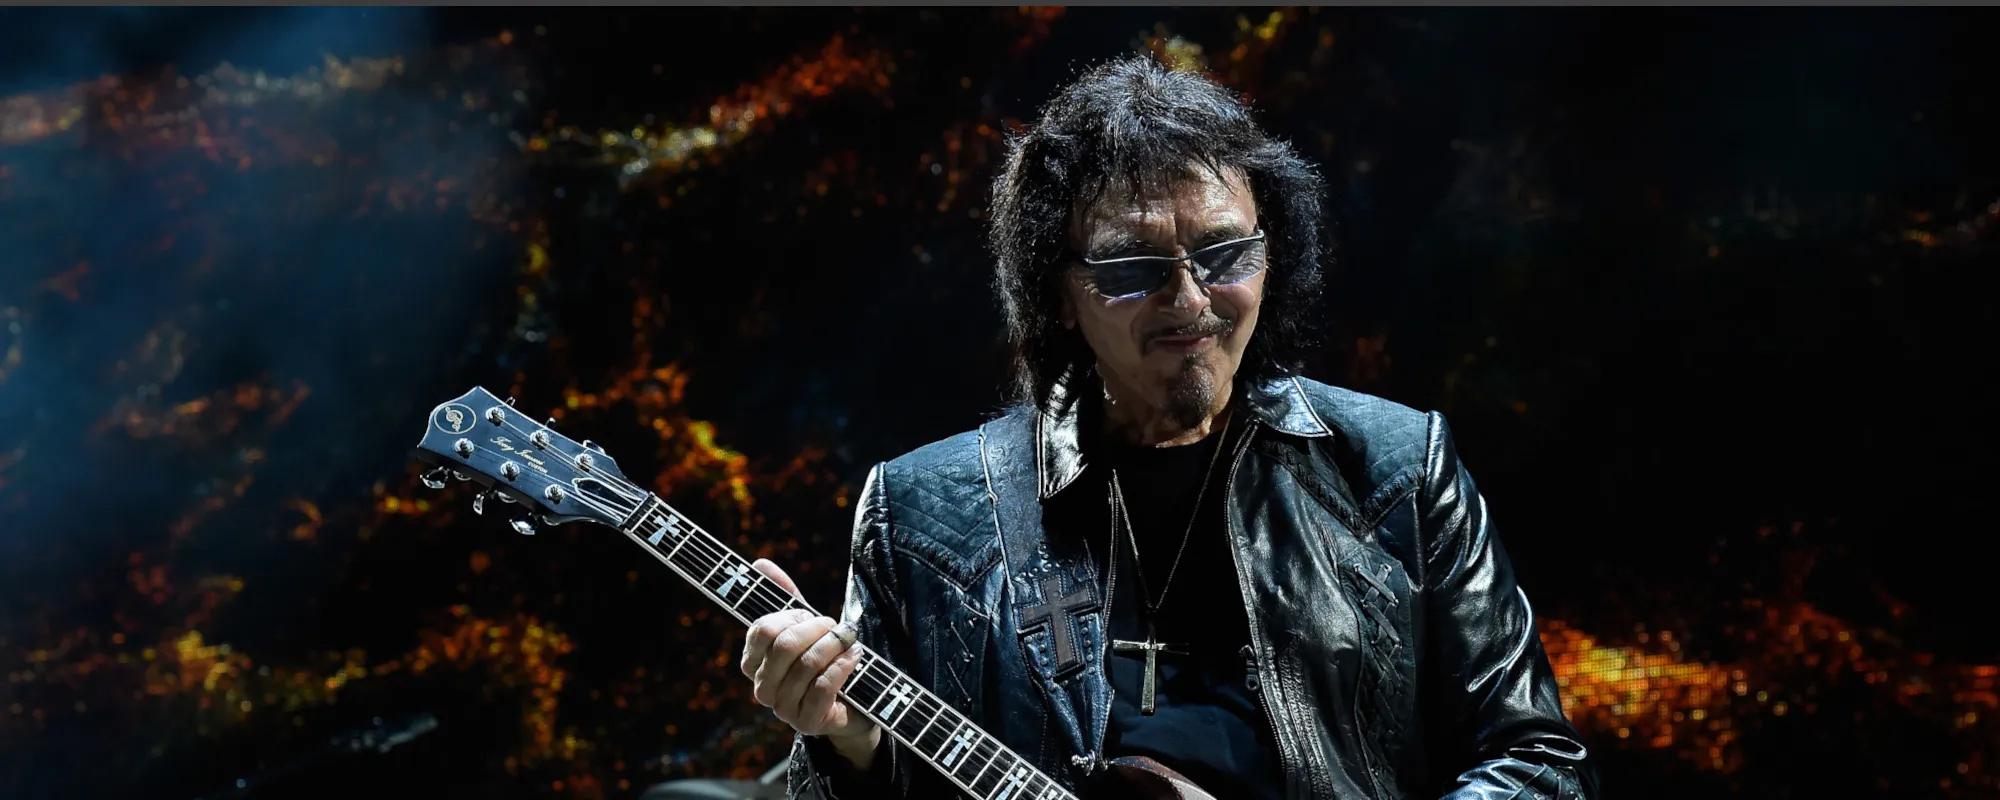 Tony Iommi Won’t Rule Out Black Sabbath Reunion